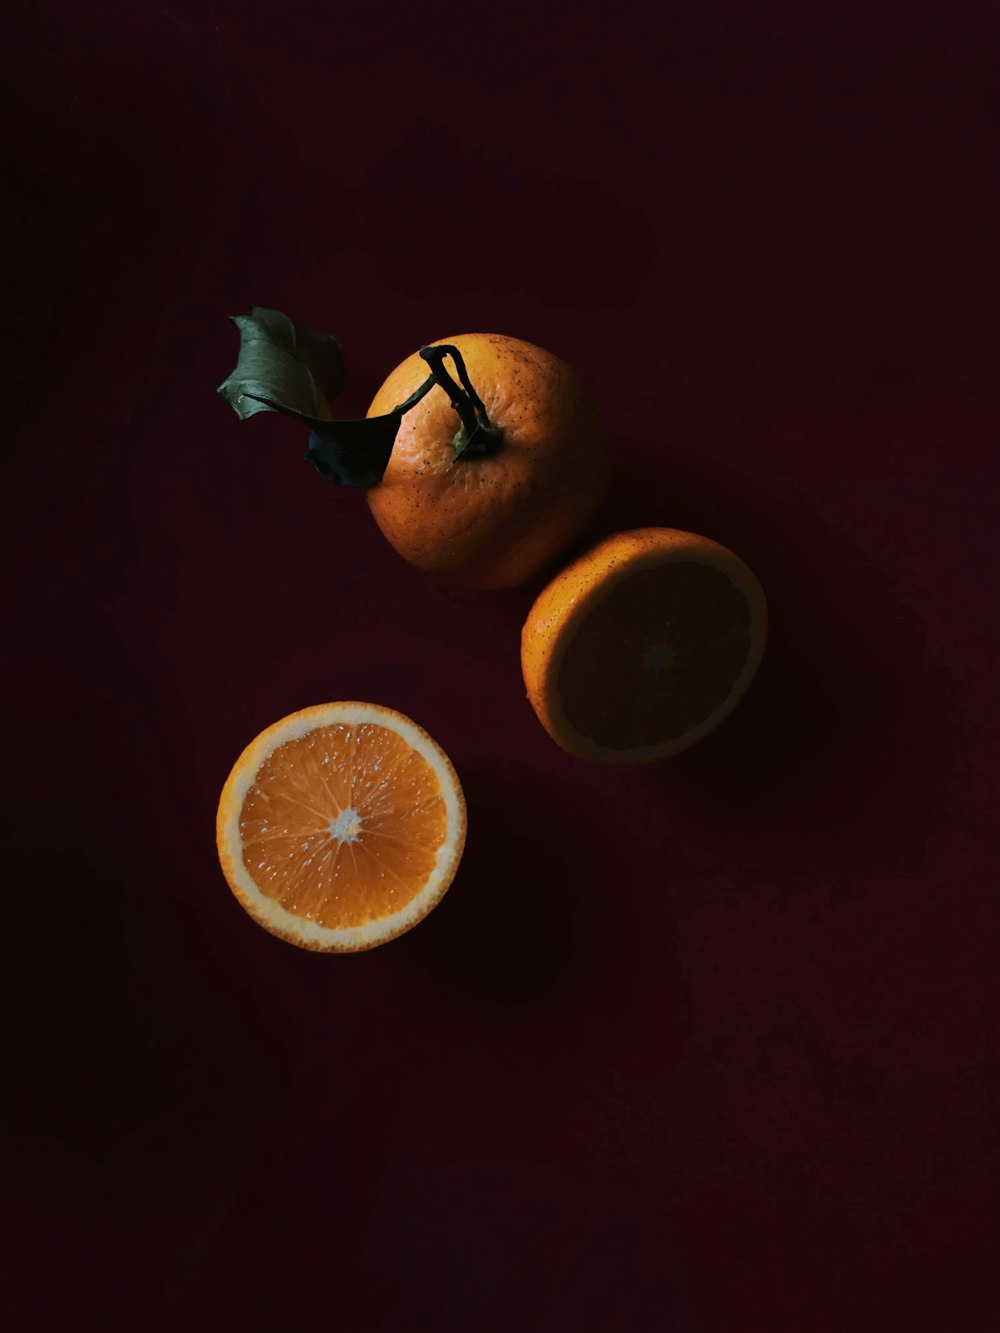 fruta laranja fatiada na superfície marrom